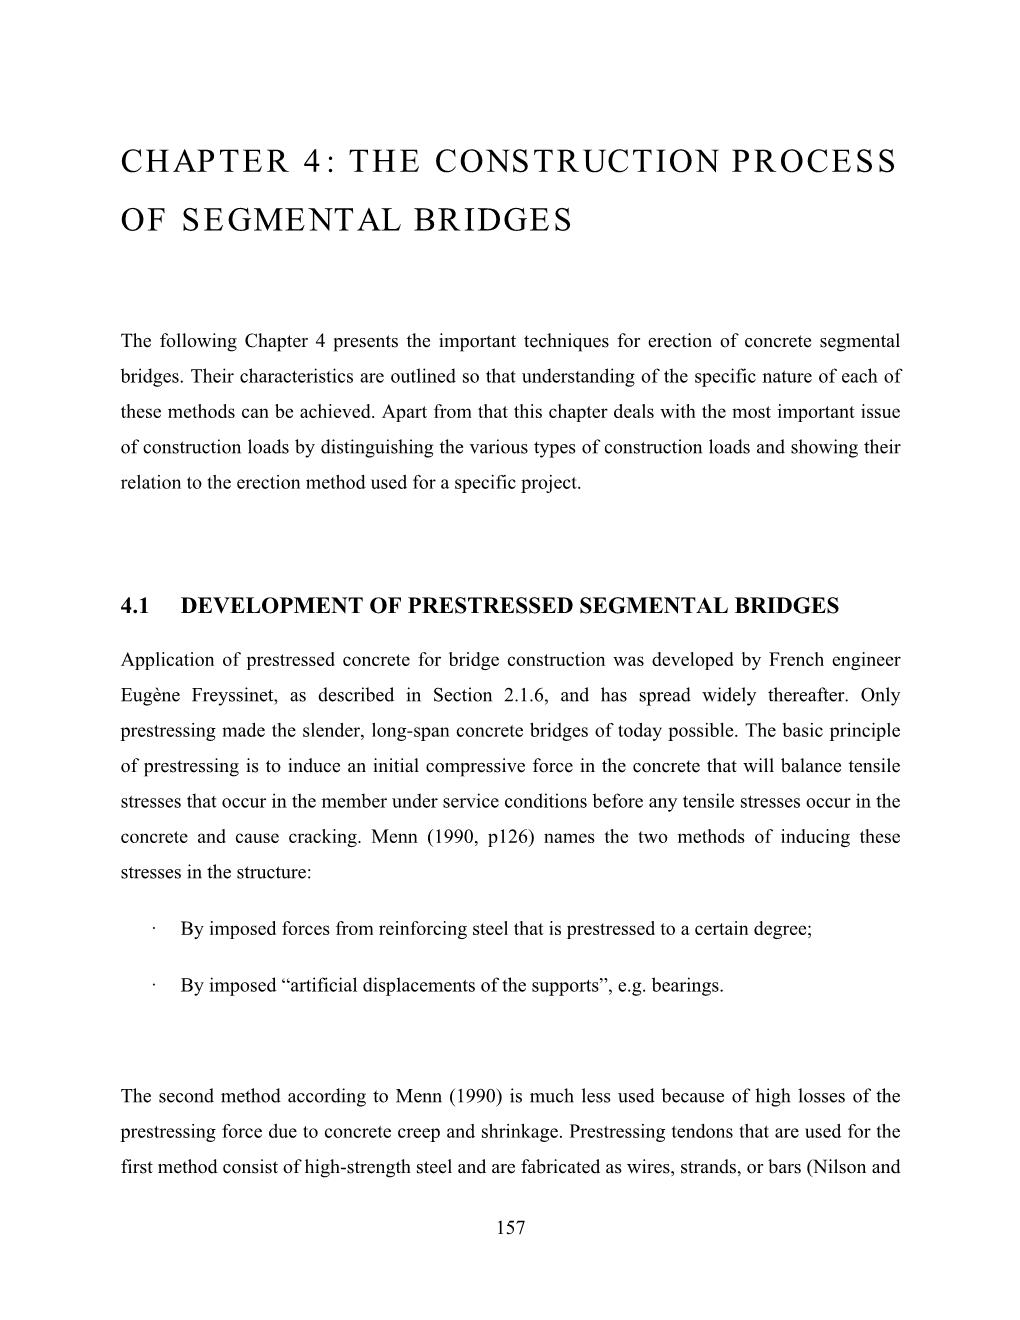 The Construction Process of Segmental Bridges